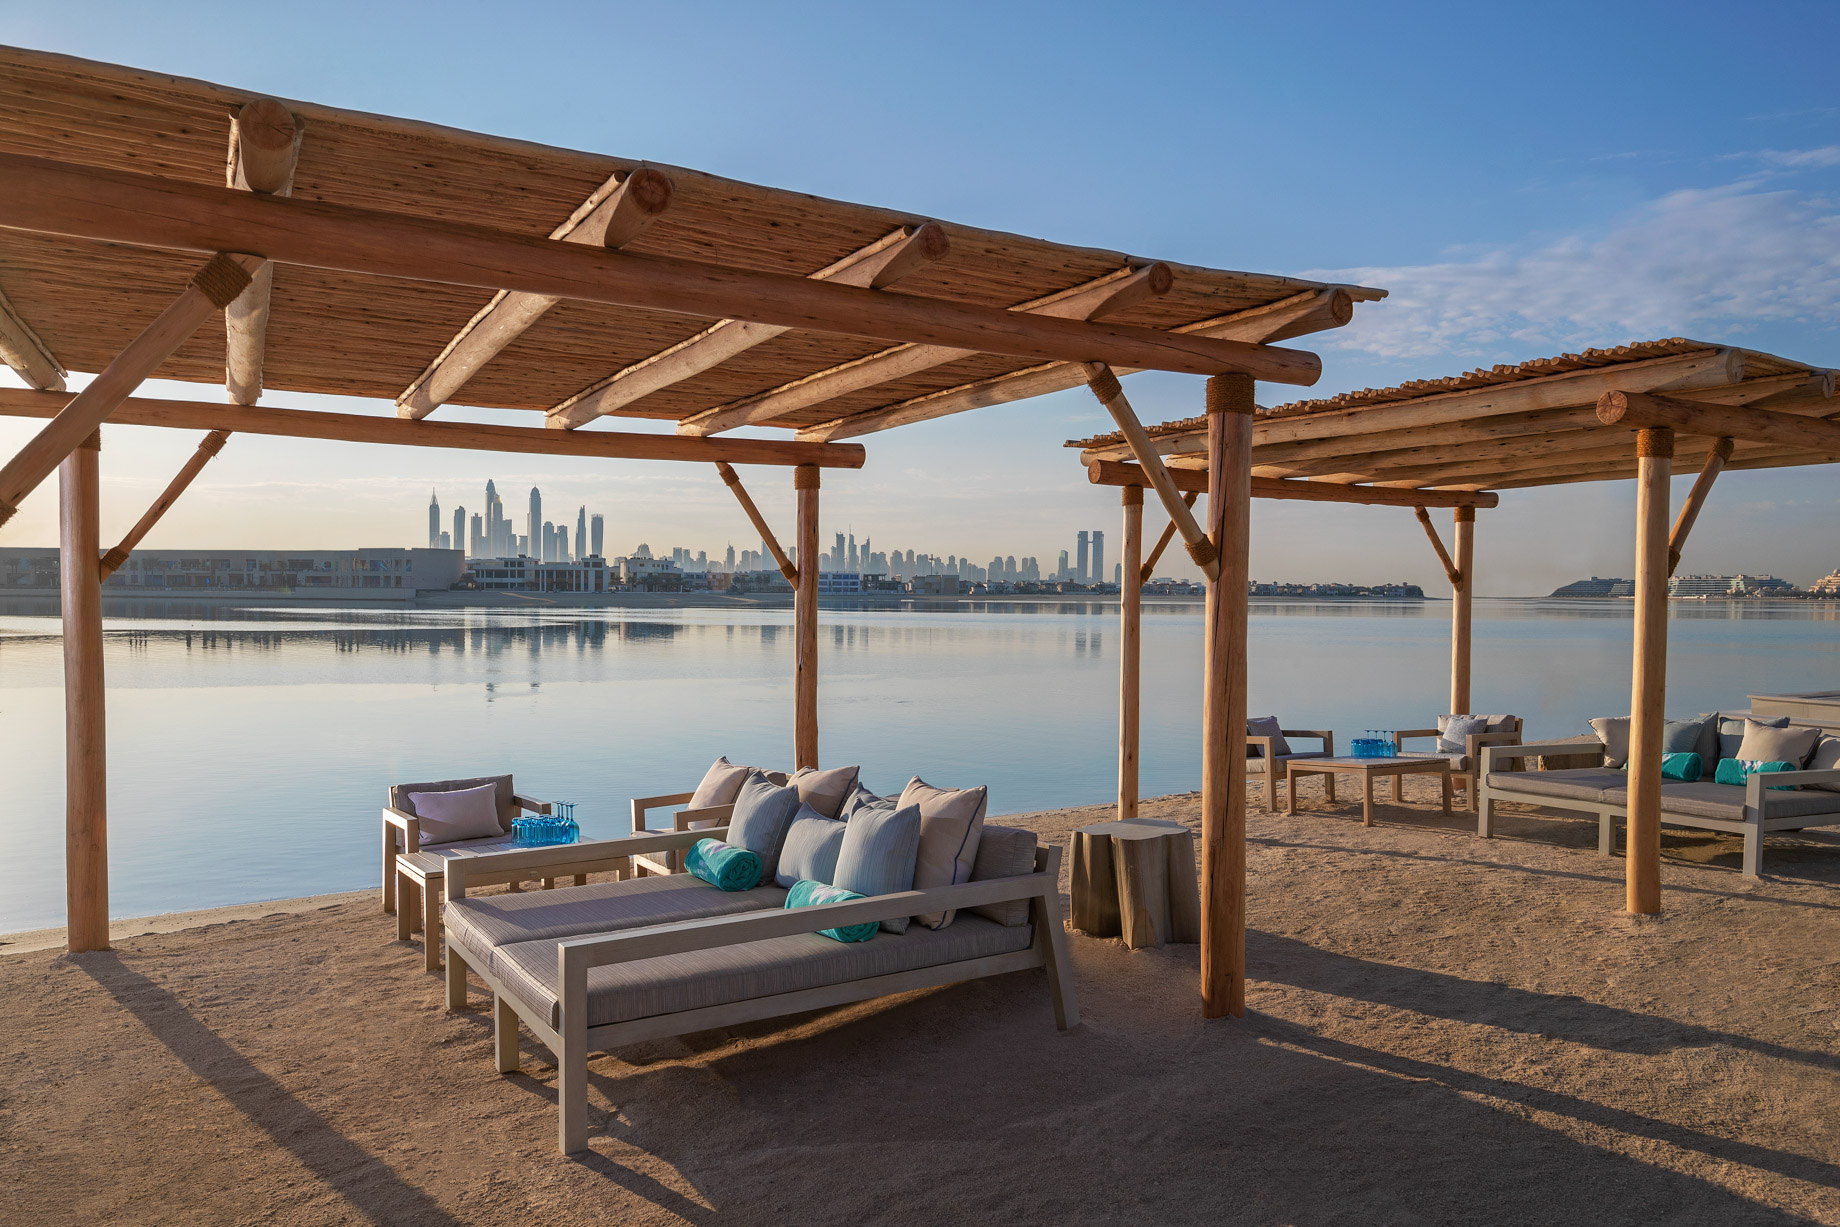 Atlantis The Palm Resort – Crescent Rd, Dubai, UAE – White Beach Club Sand Lounge